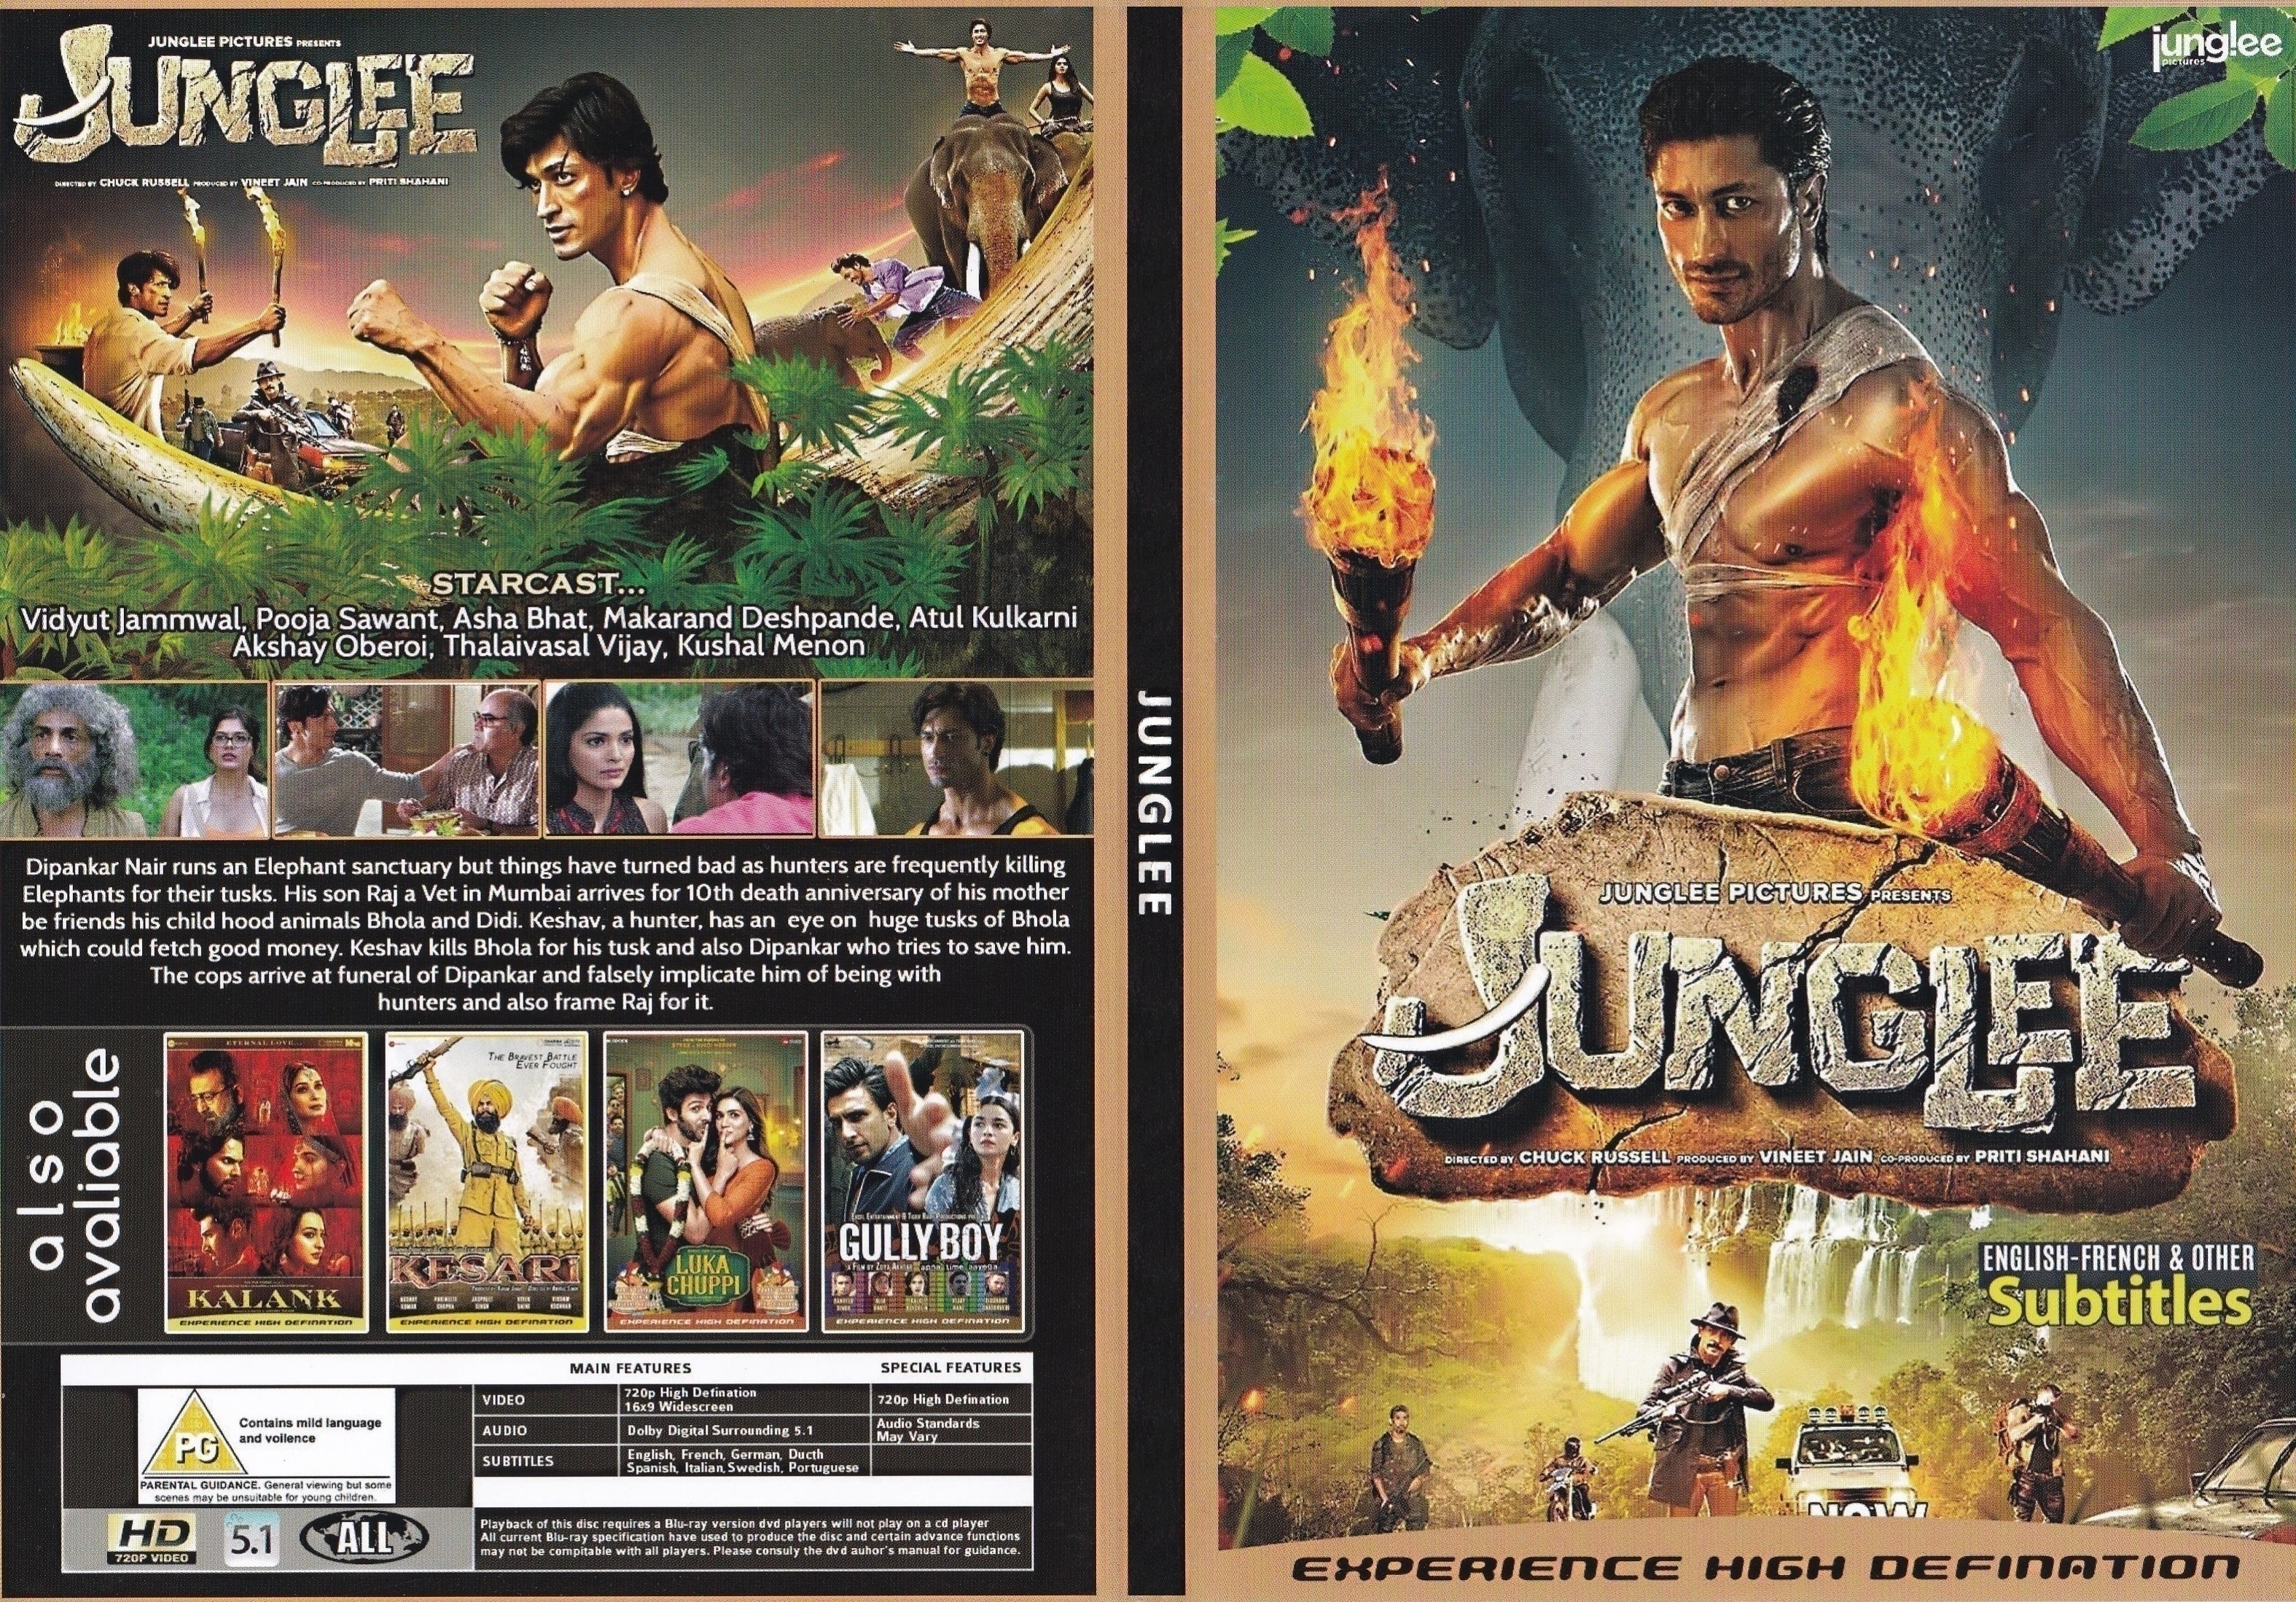 Jaquette DVD Junglee ZONE 1